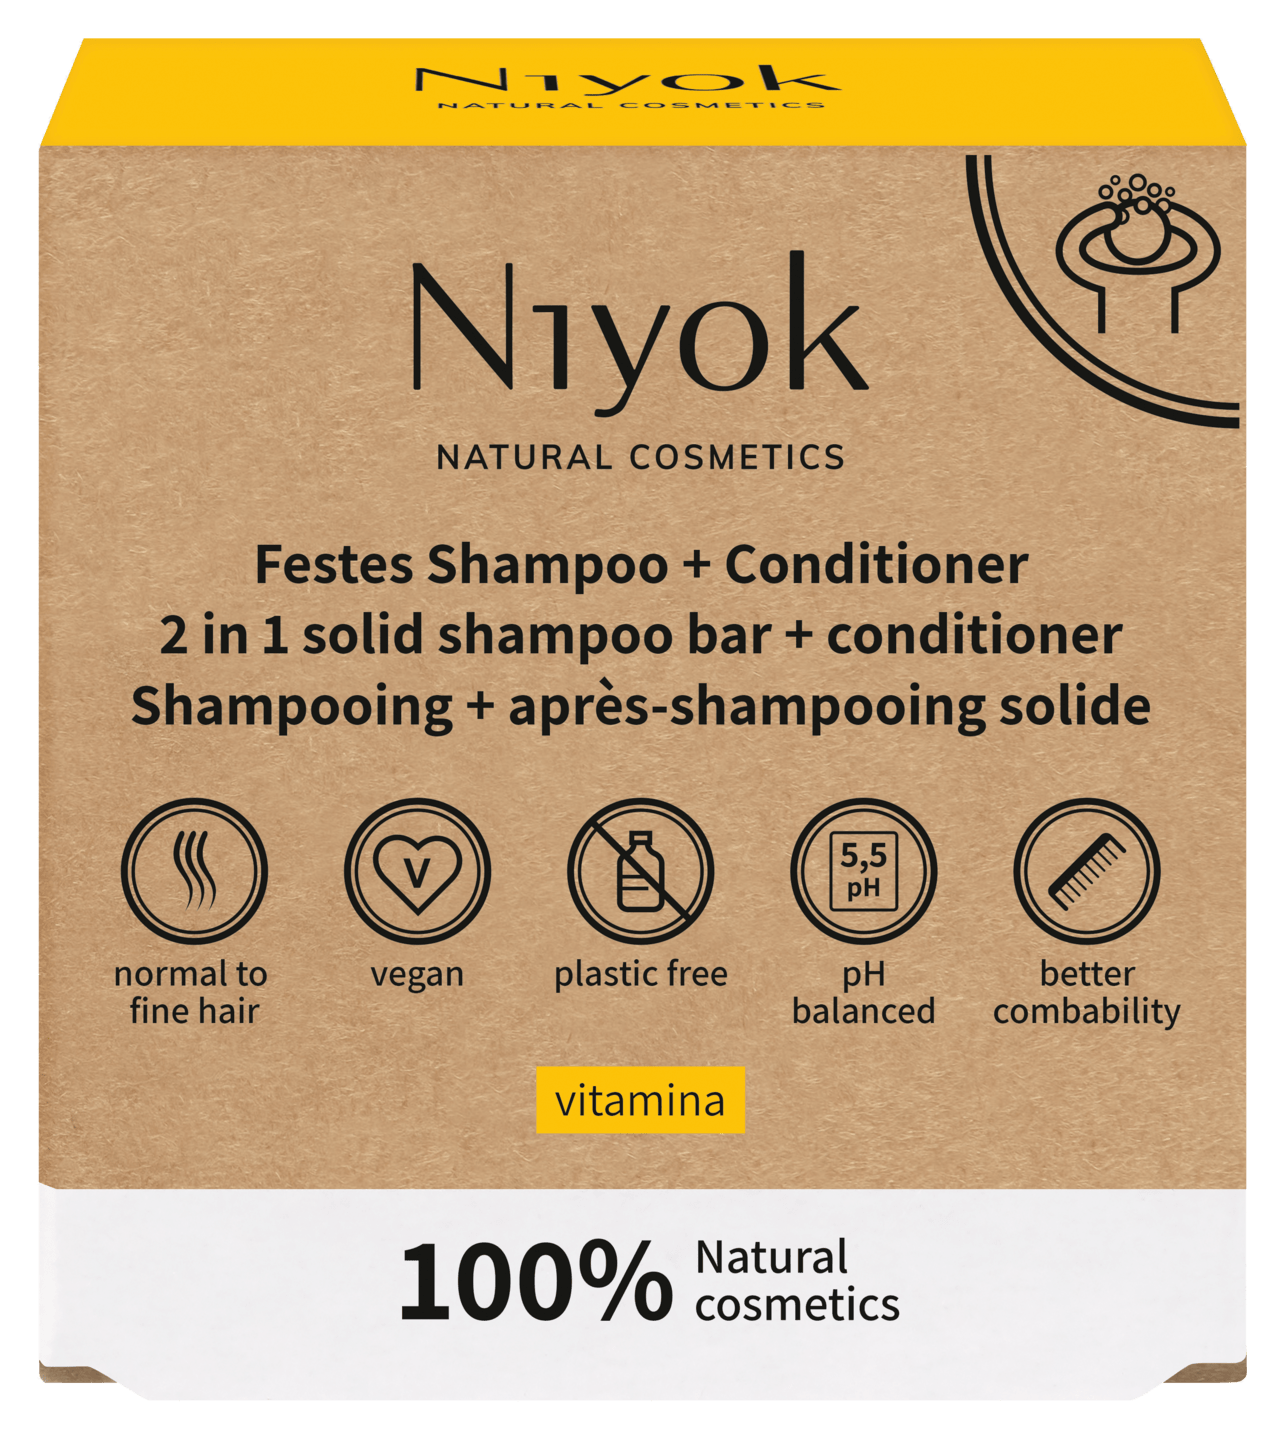 Festes Shampoo + Conditioner, 80 g, VITAMINA